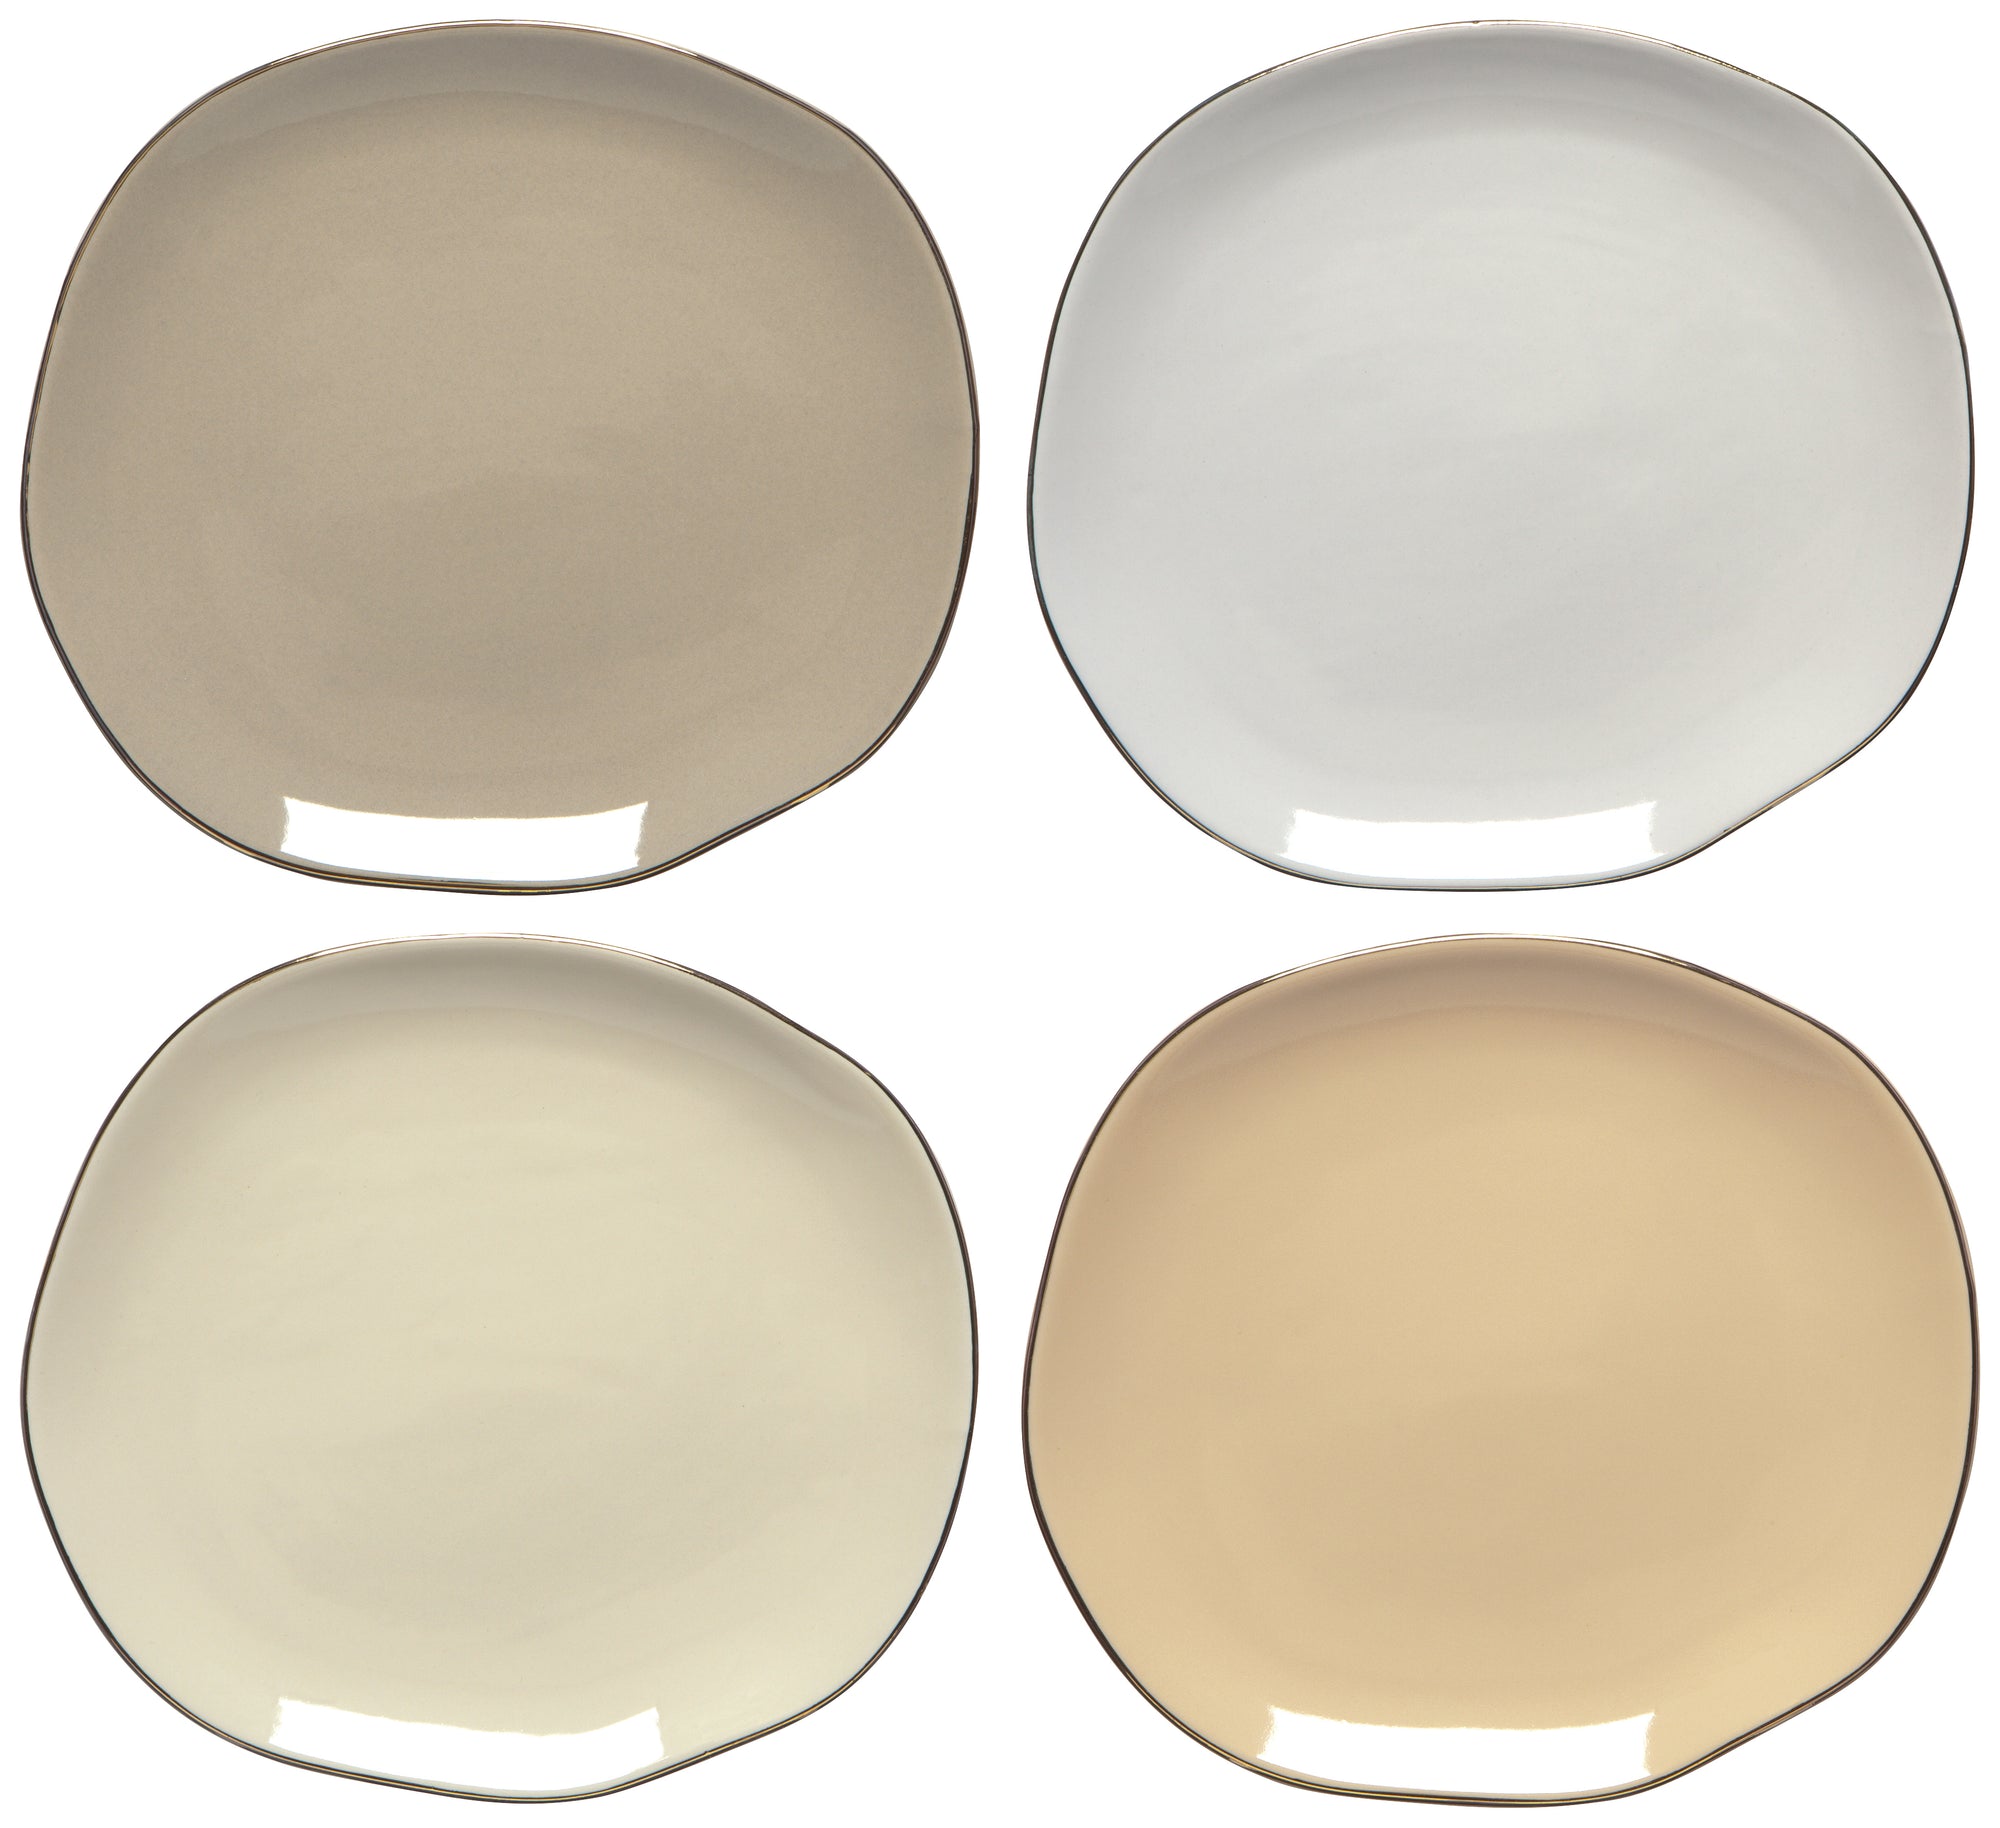 Pebble Plates (Set of 4)